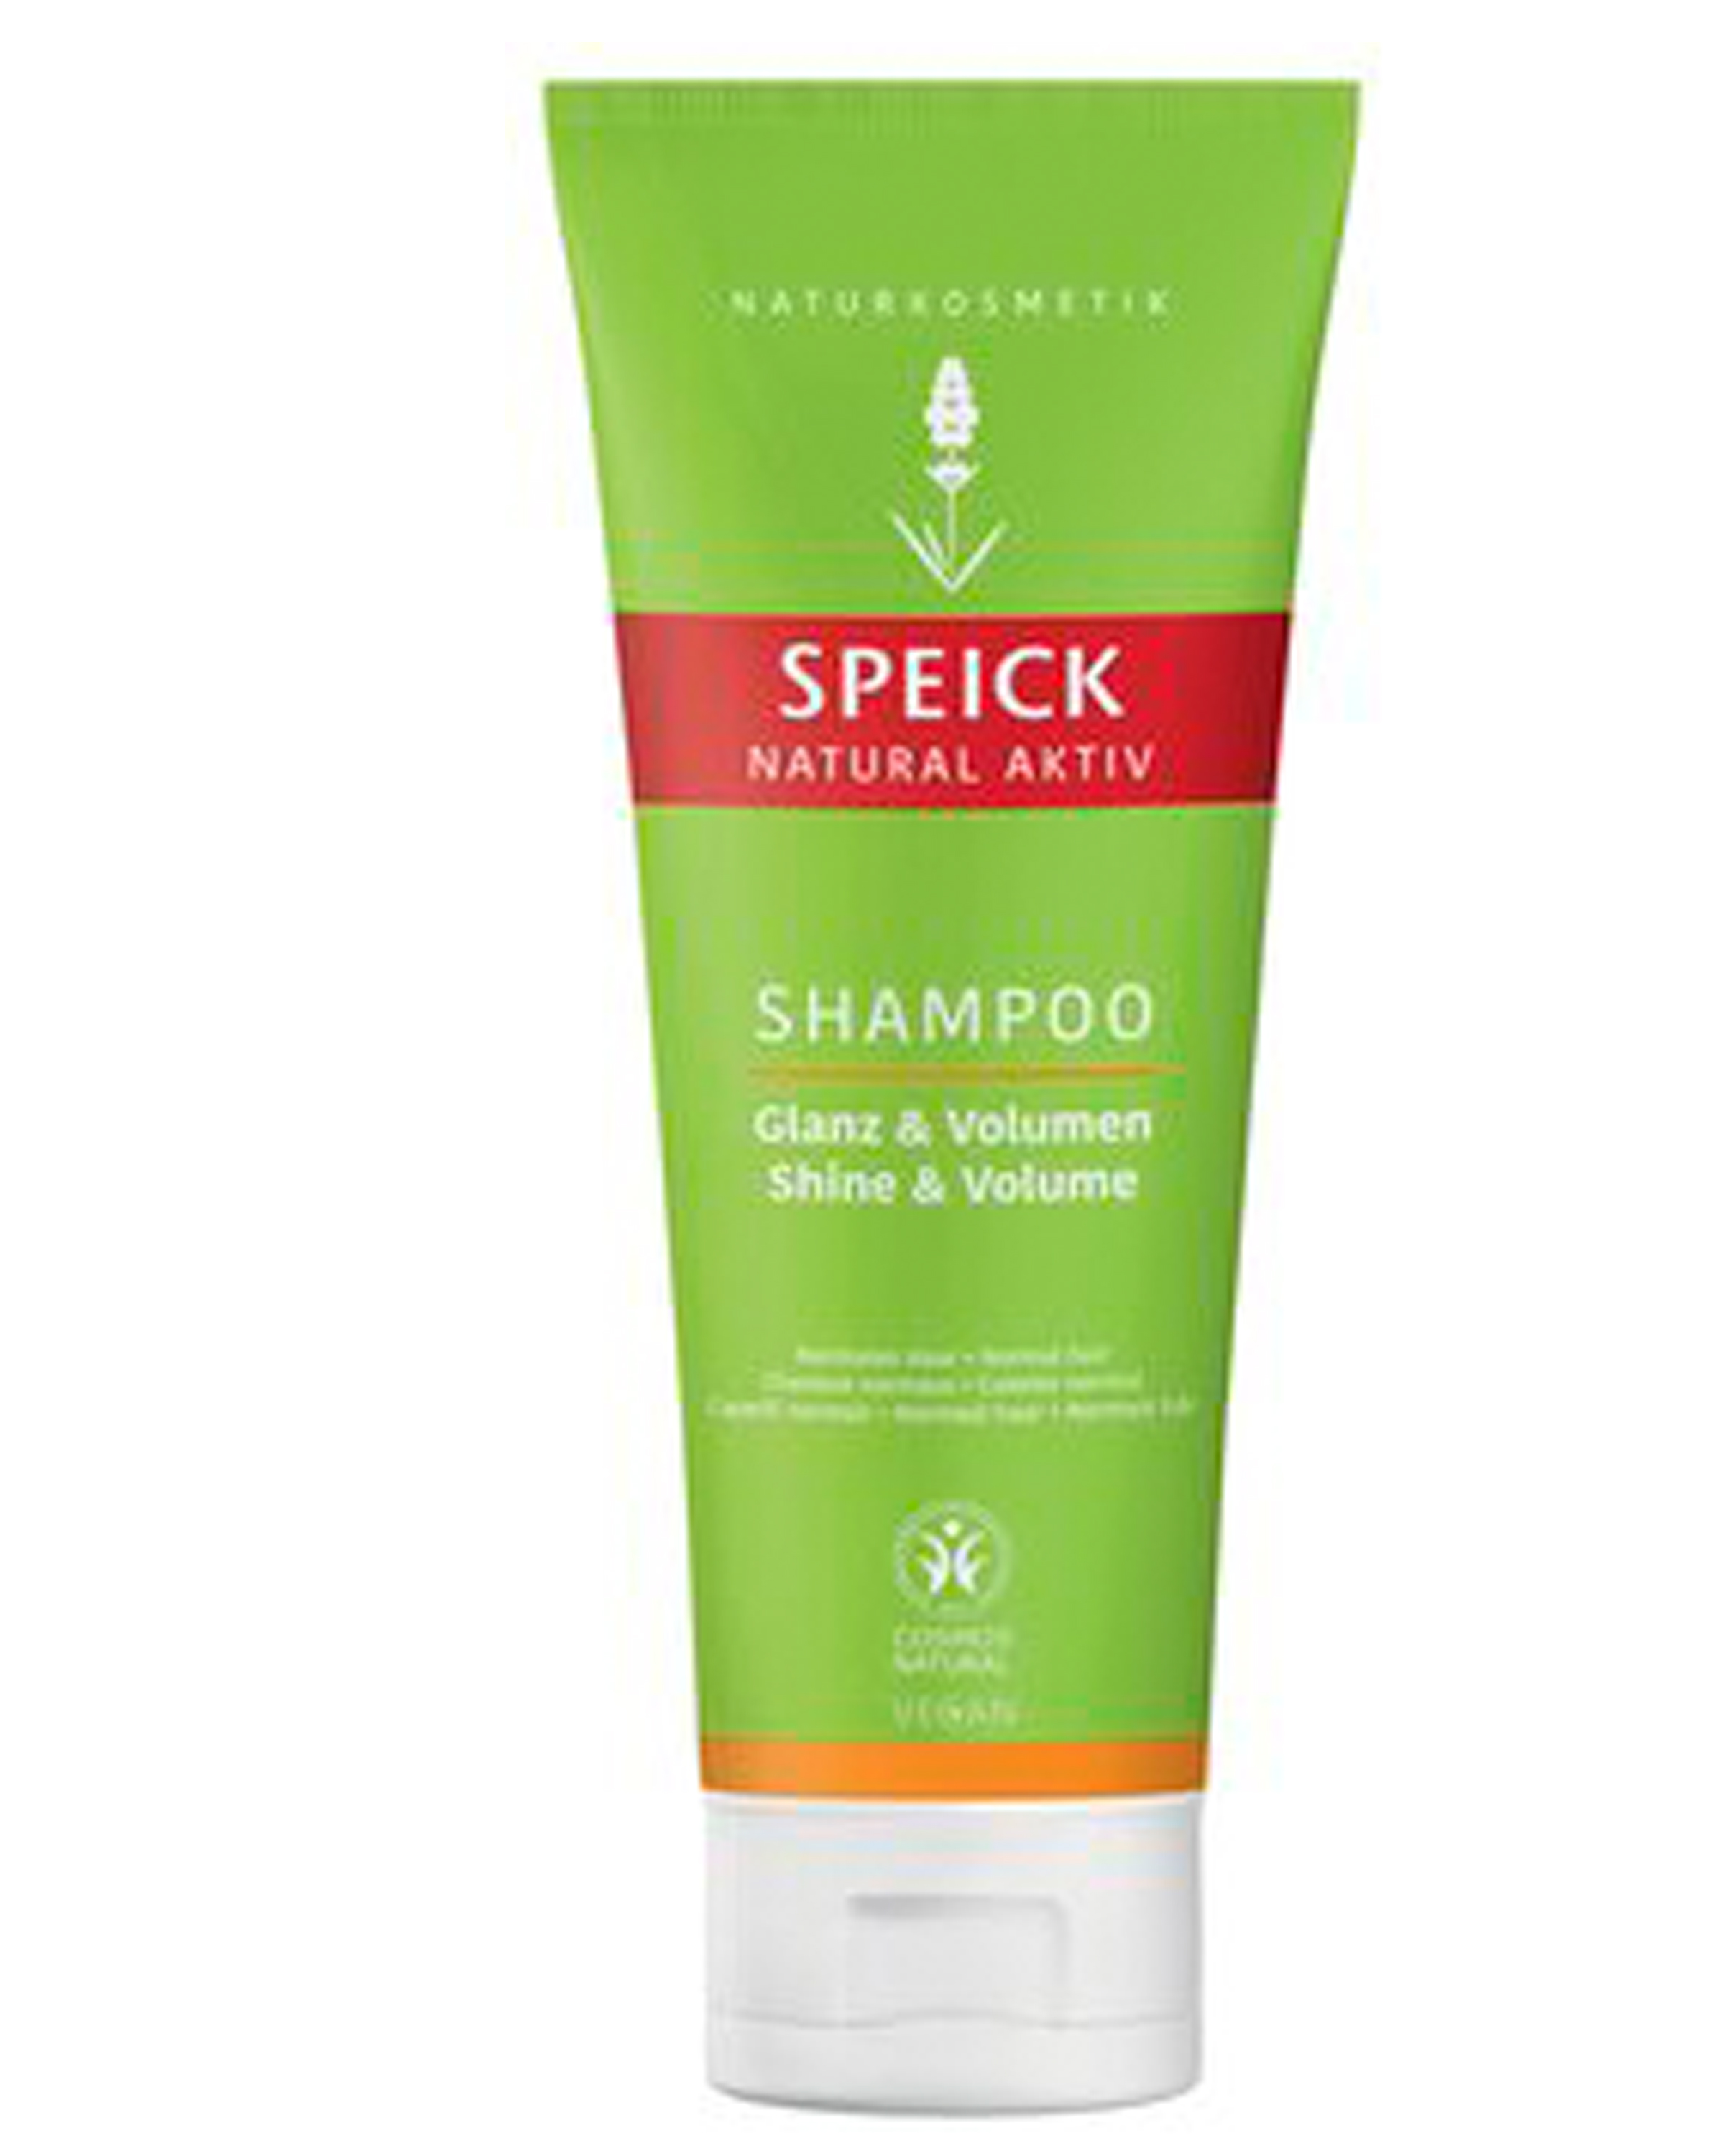 Speick Natural Aktiv Shampoo